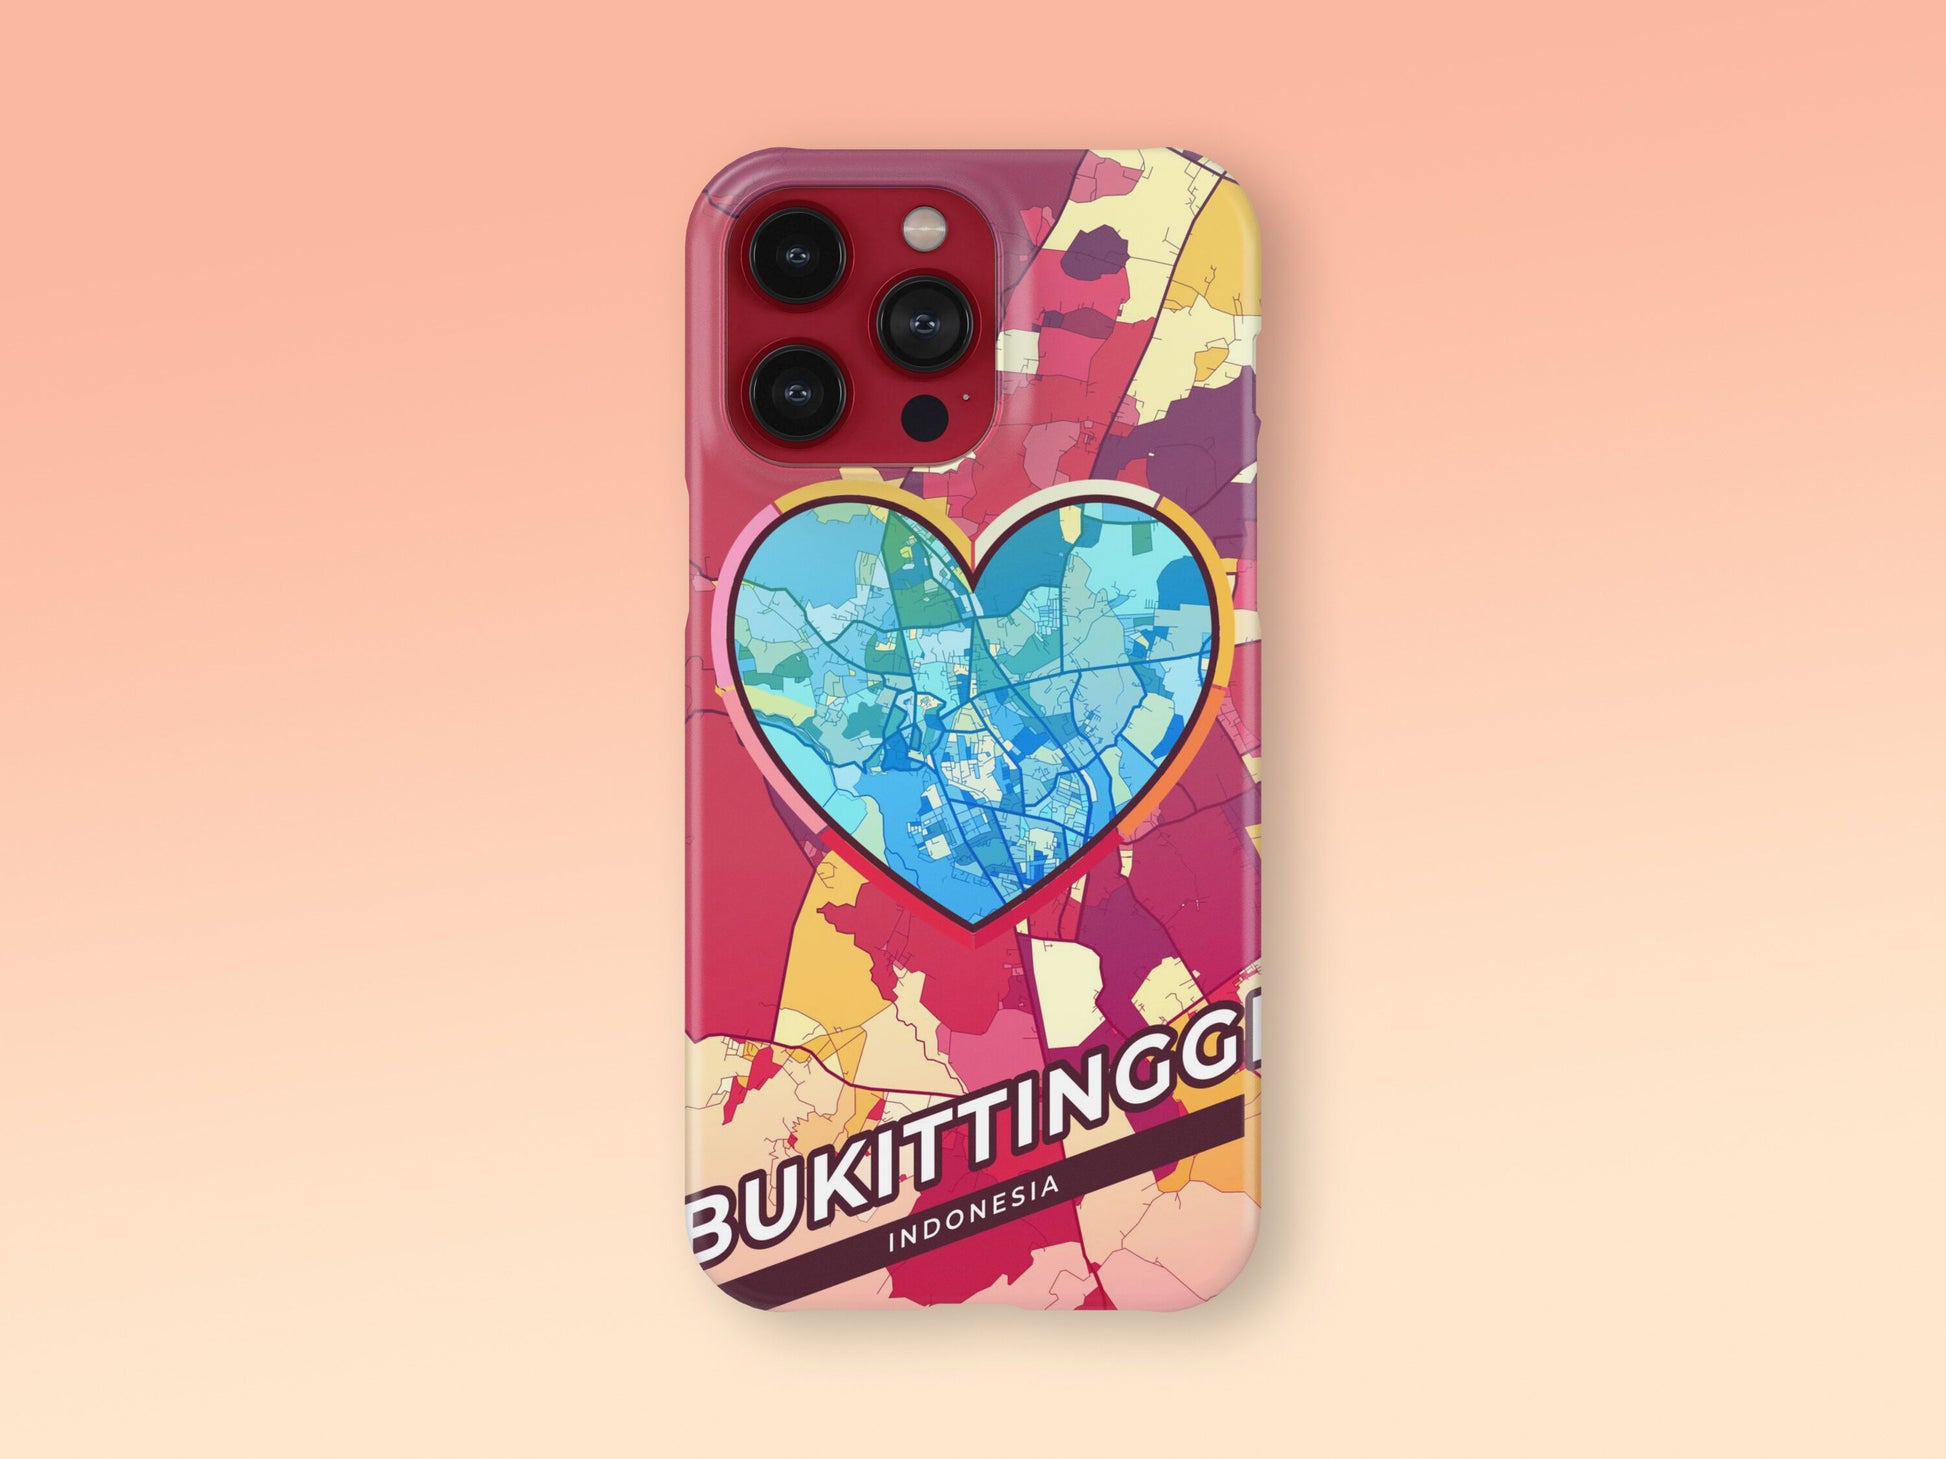 Bukittinggi Indonesia slim phone case with colorful icon. Birthday, wedding or housewarming gift. Couple match cases. 2